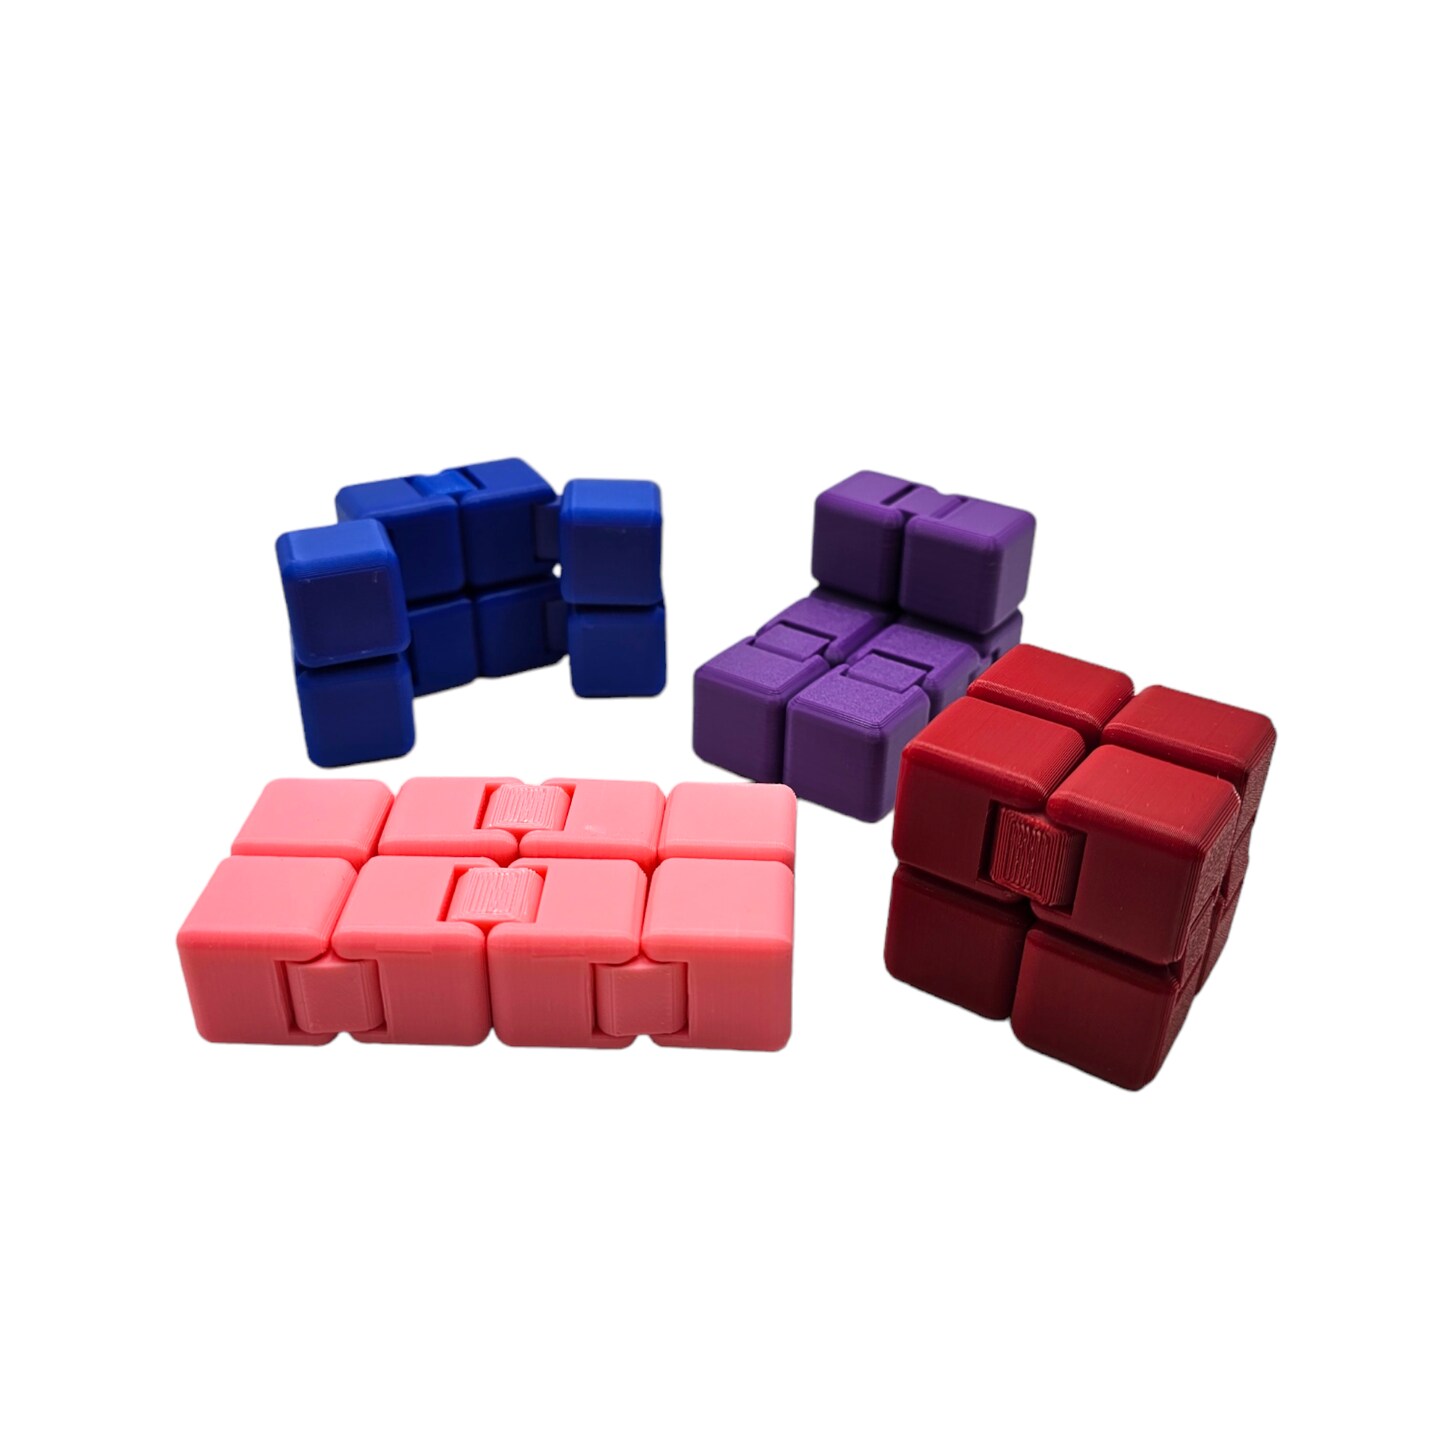 3D Printed Fidget Infinity Cube